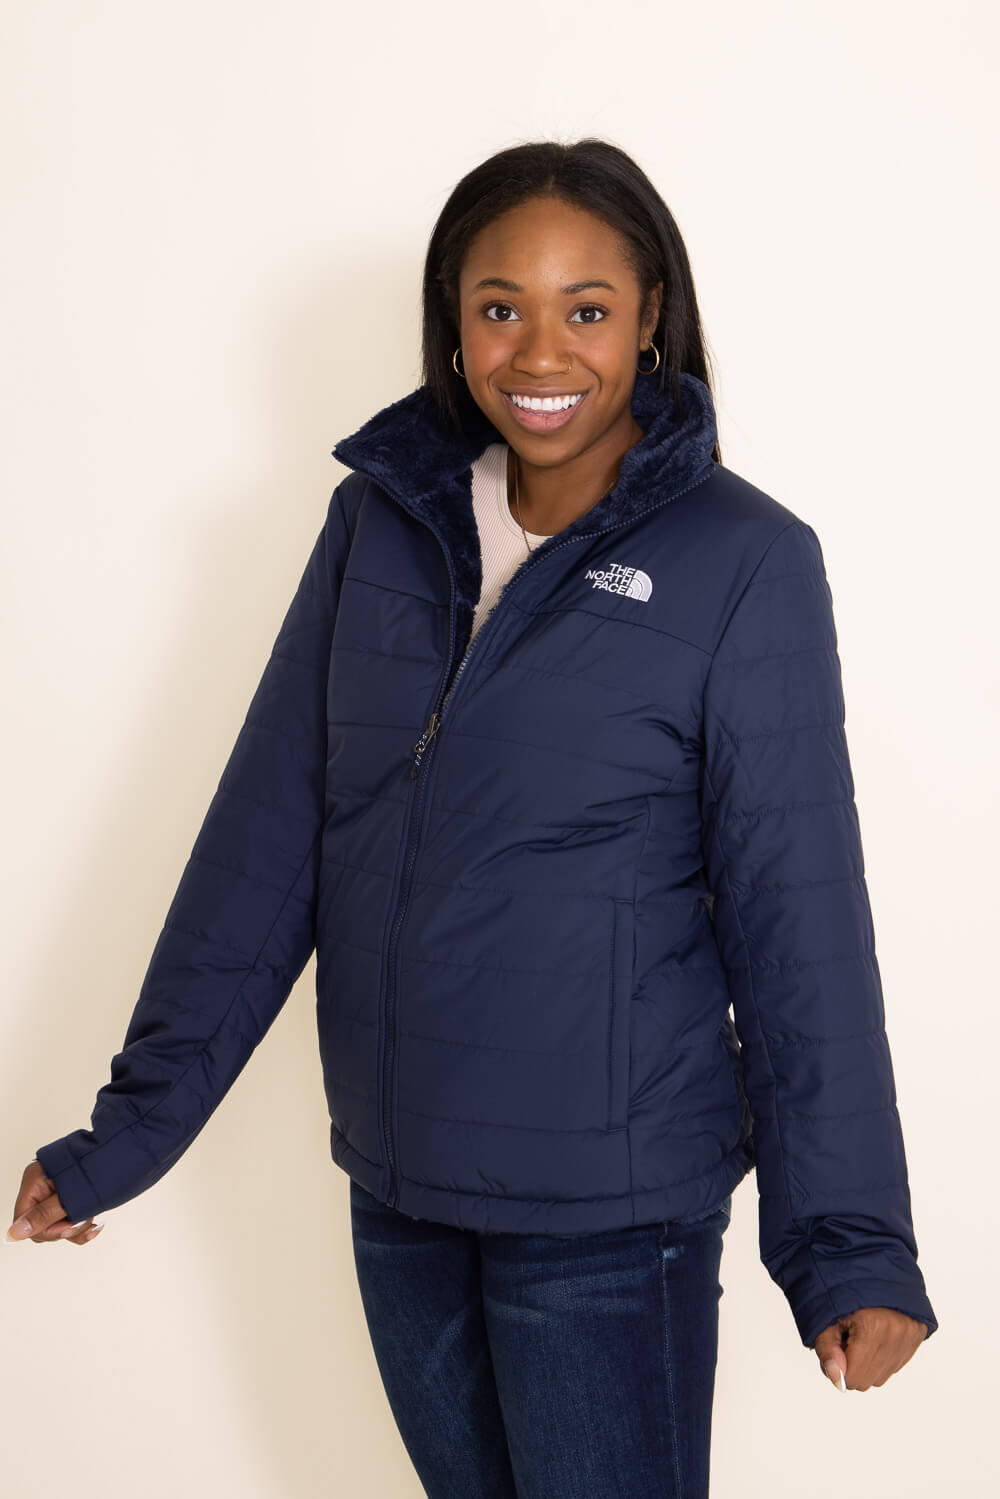 Jackets For Women - Get Upto 40% Off on Winter Jacket & Fleece Jacket |  Wildcraft